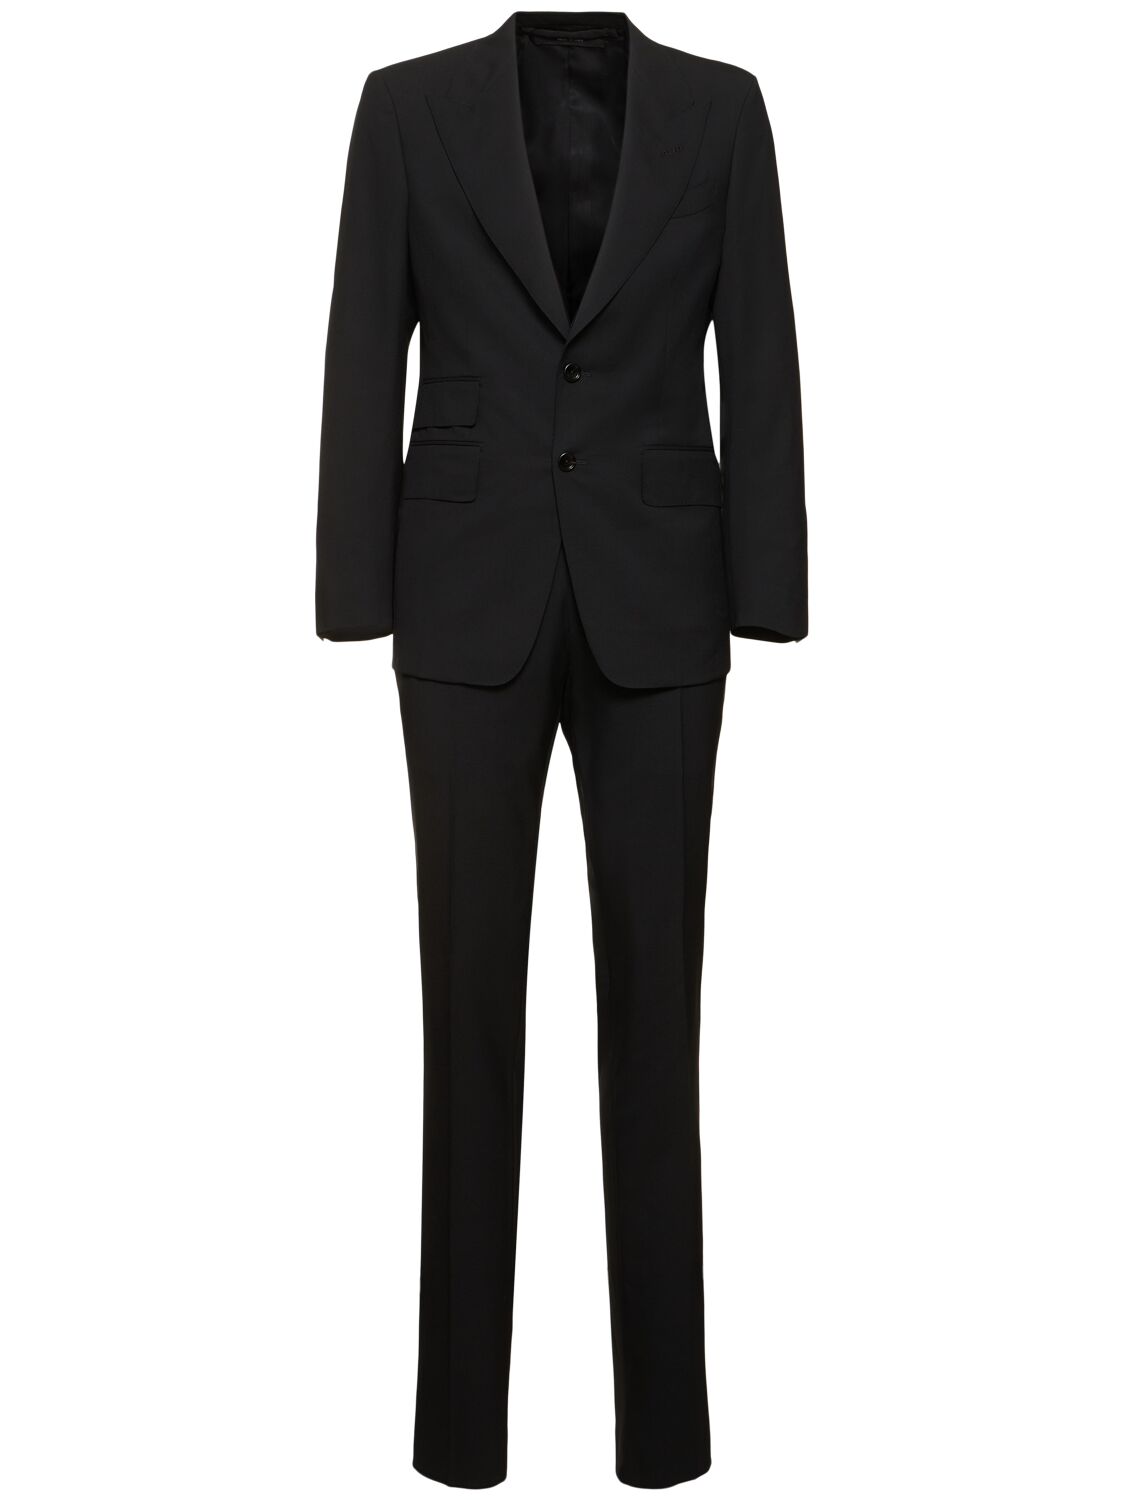 Tom Ford Shelton Peak Lapel Suit In Black